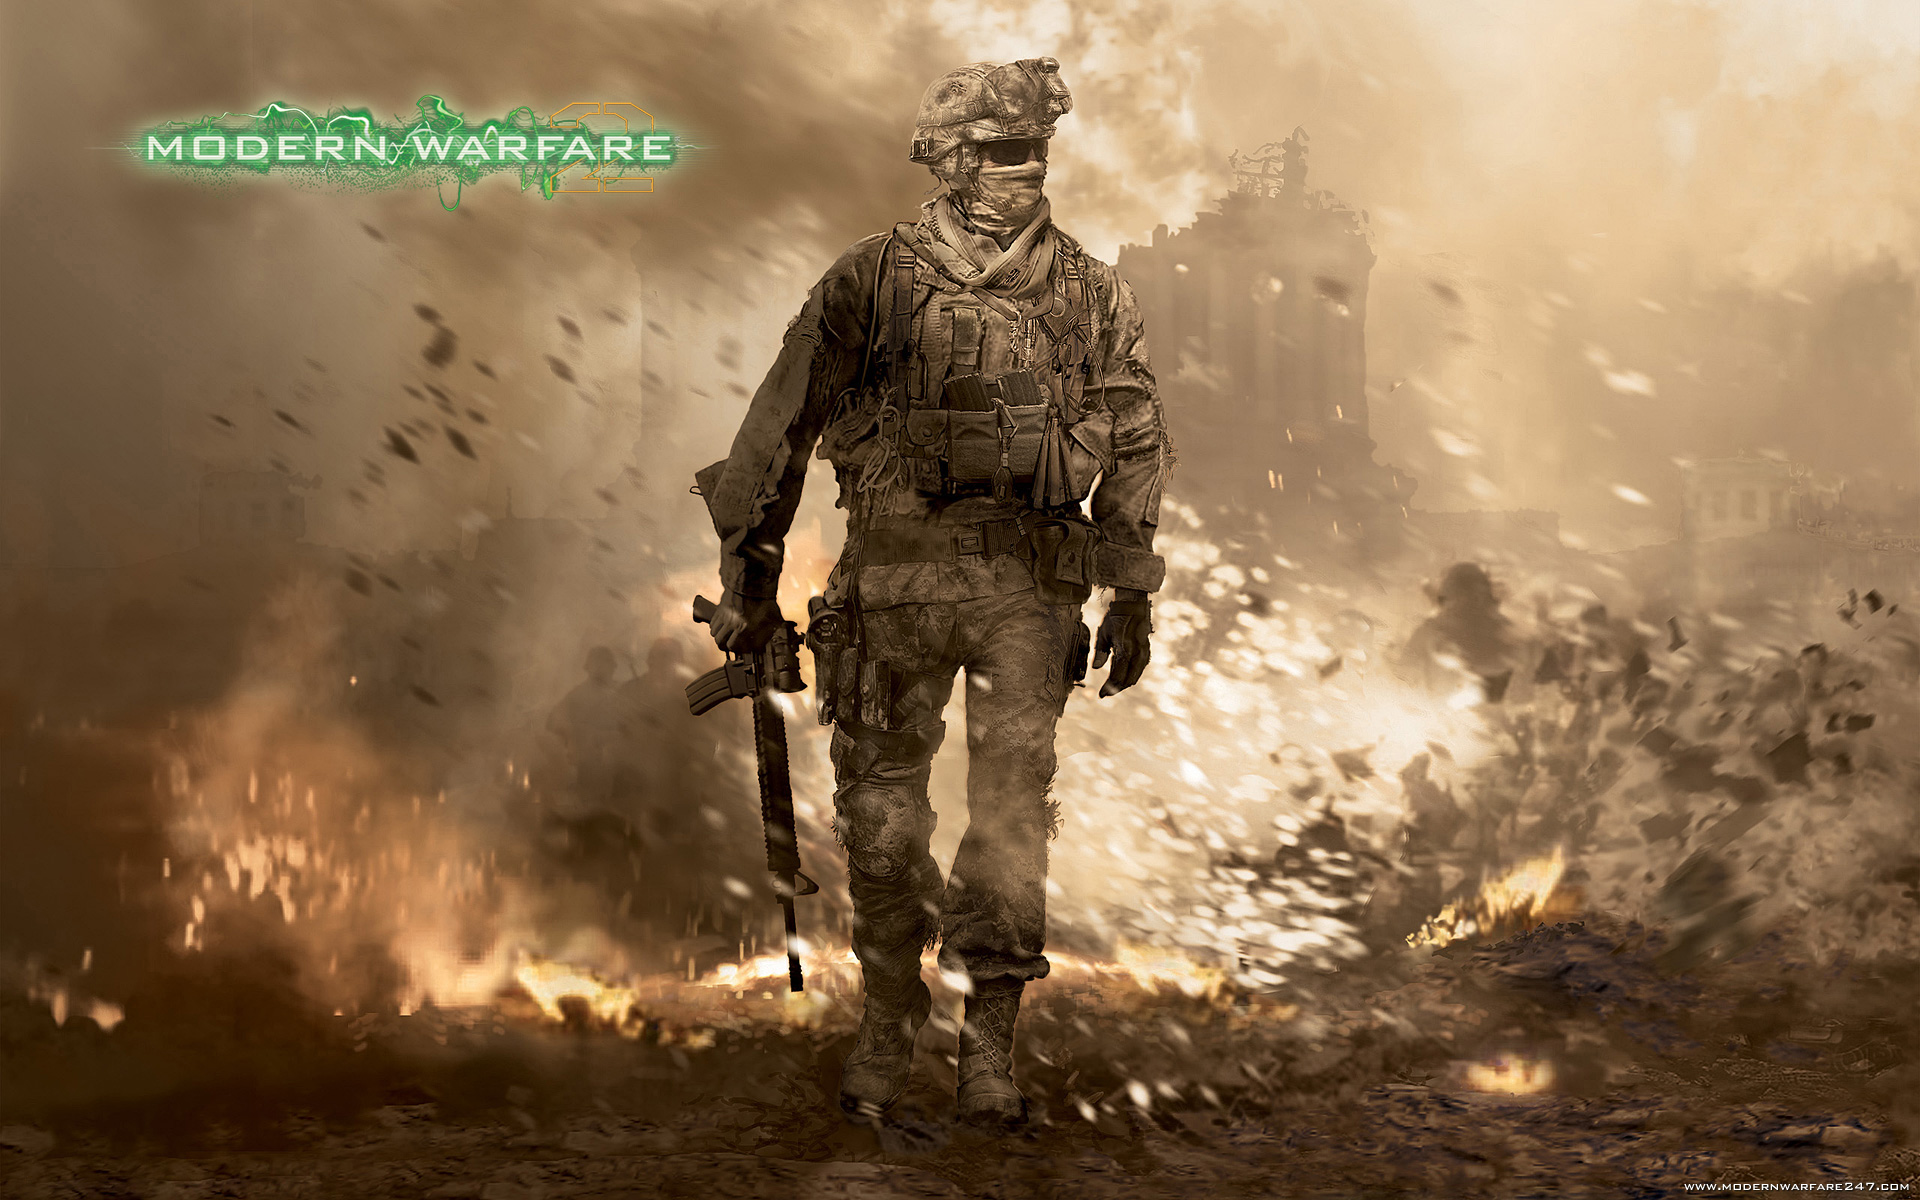 Call Of Duty 4: Modern Warfare Art